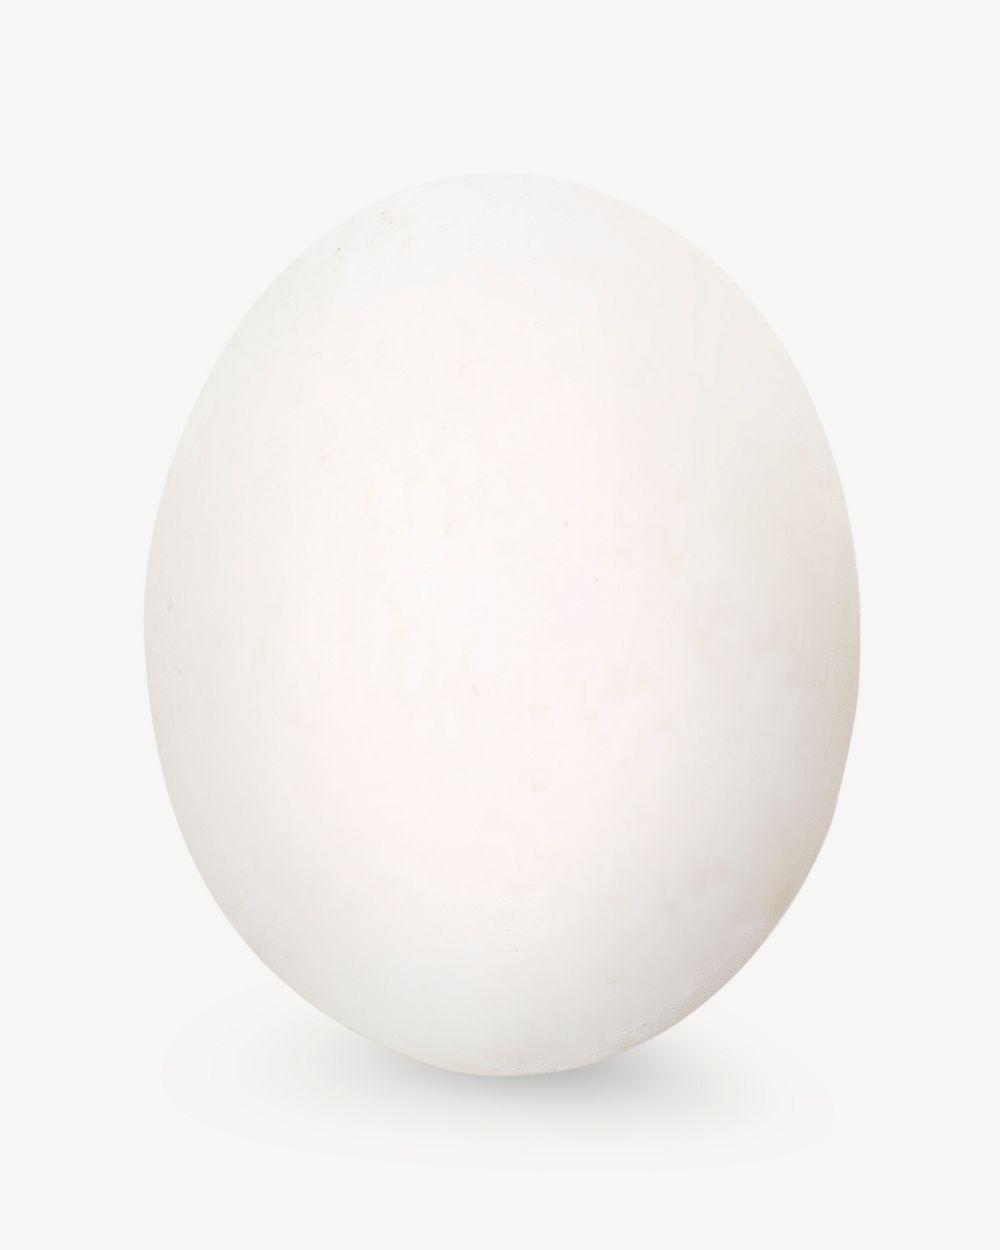 White egg image graphic psd